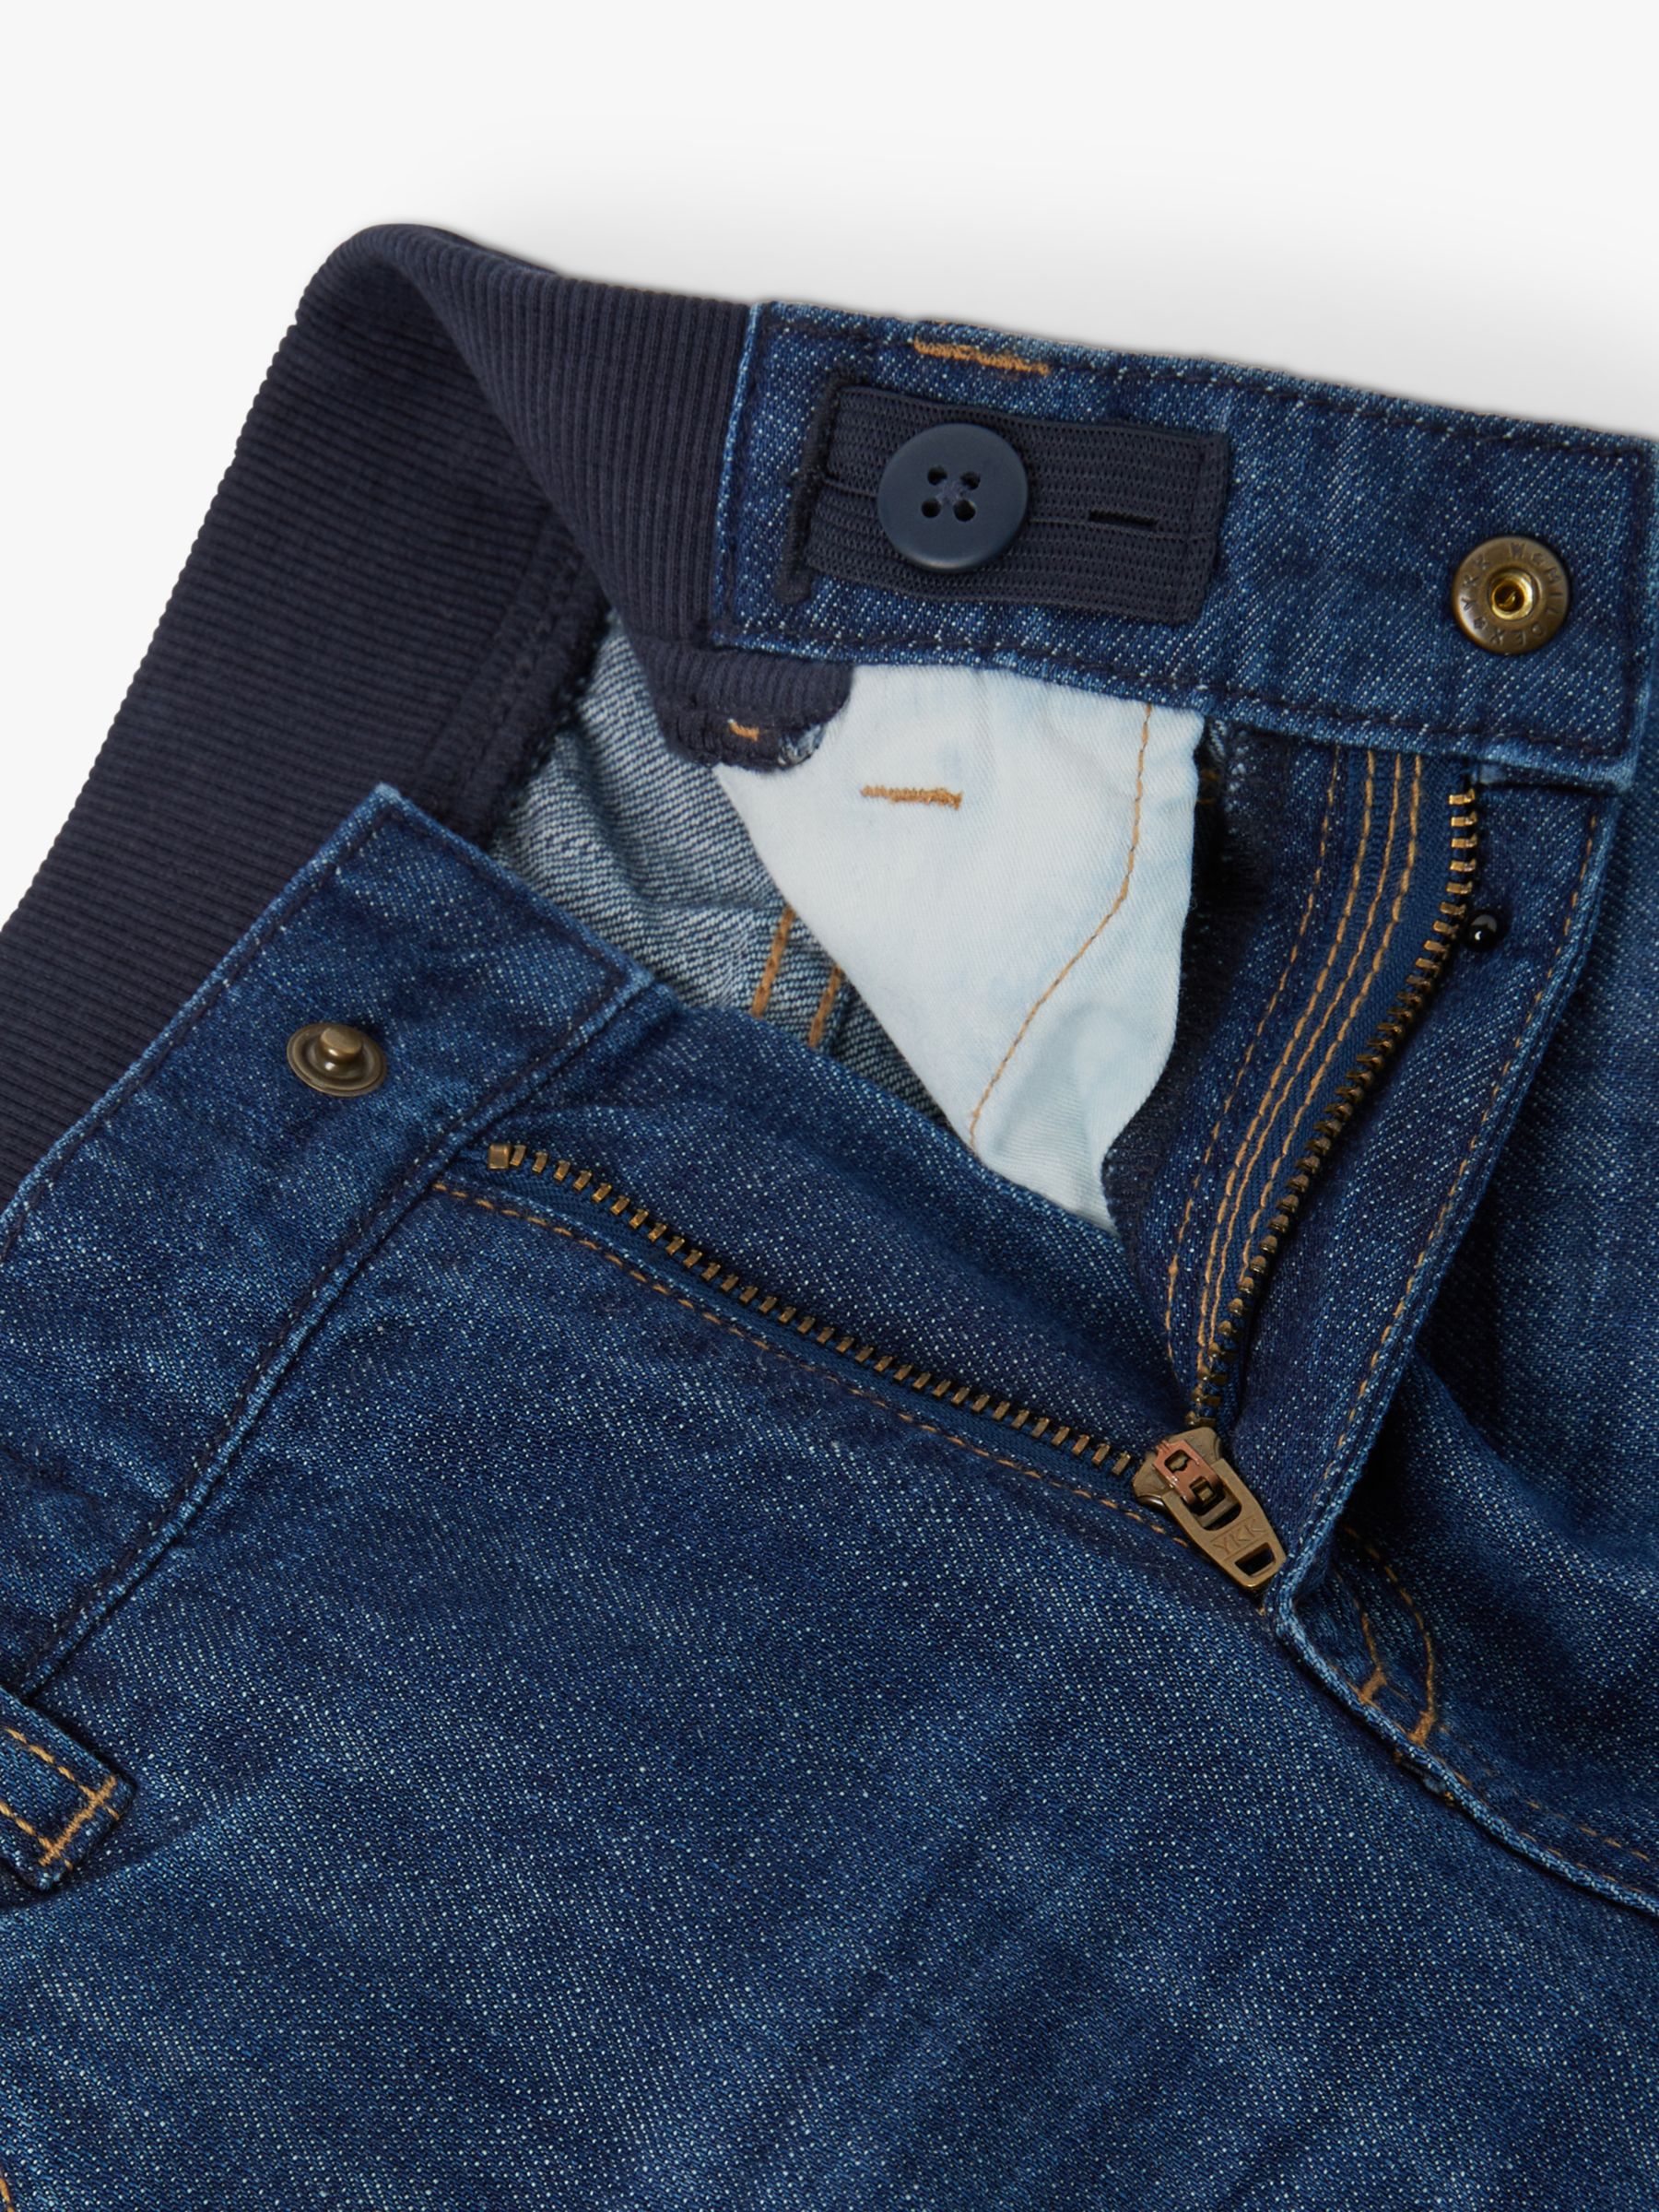 Polarn O. Pyret Kids' Loose Fit Adjustable Waist Jeans, Blue, 12-18 months